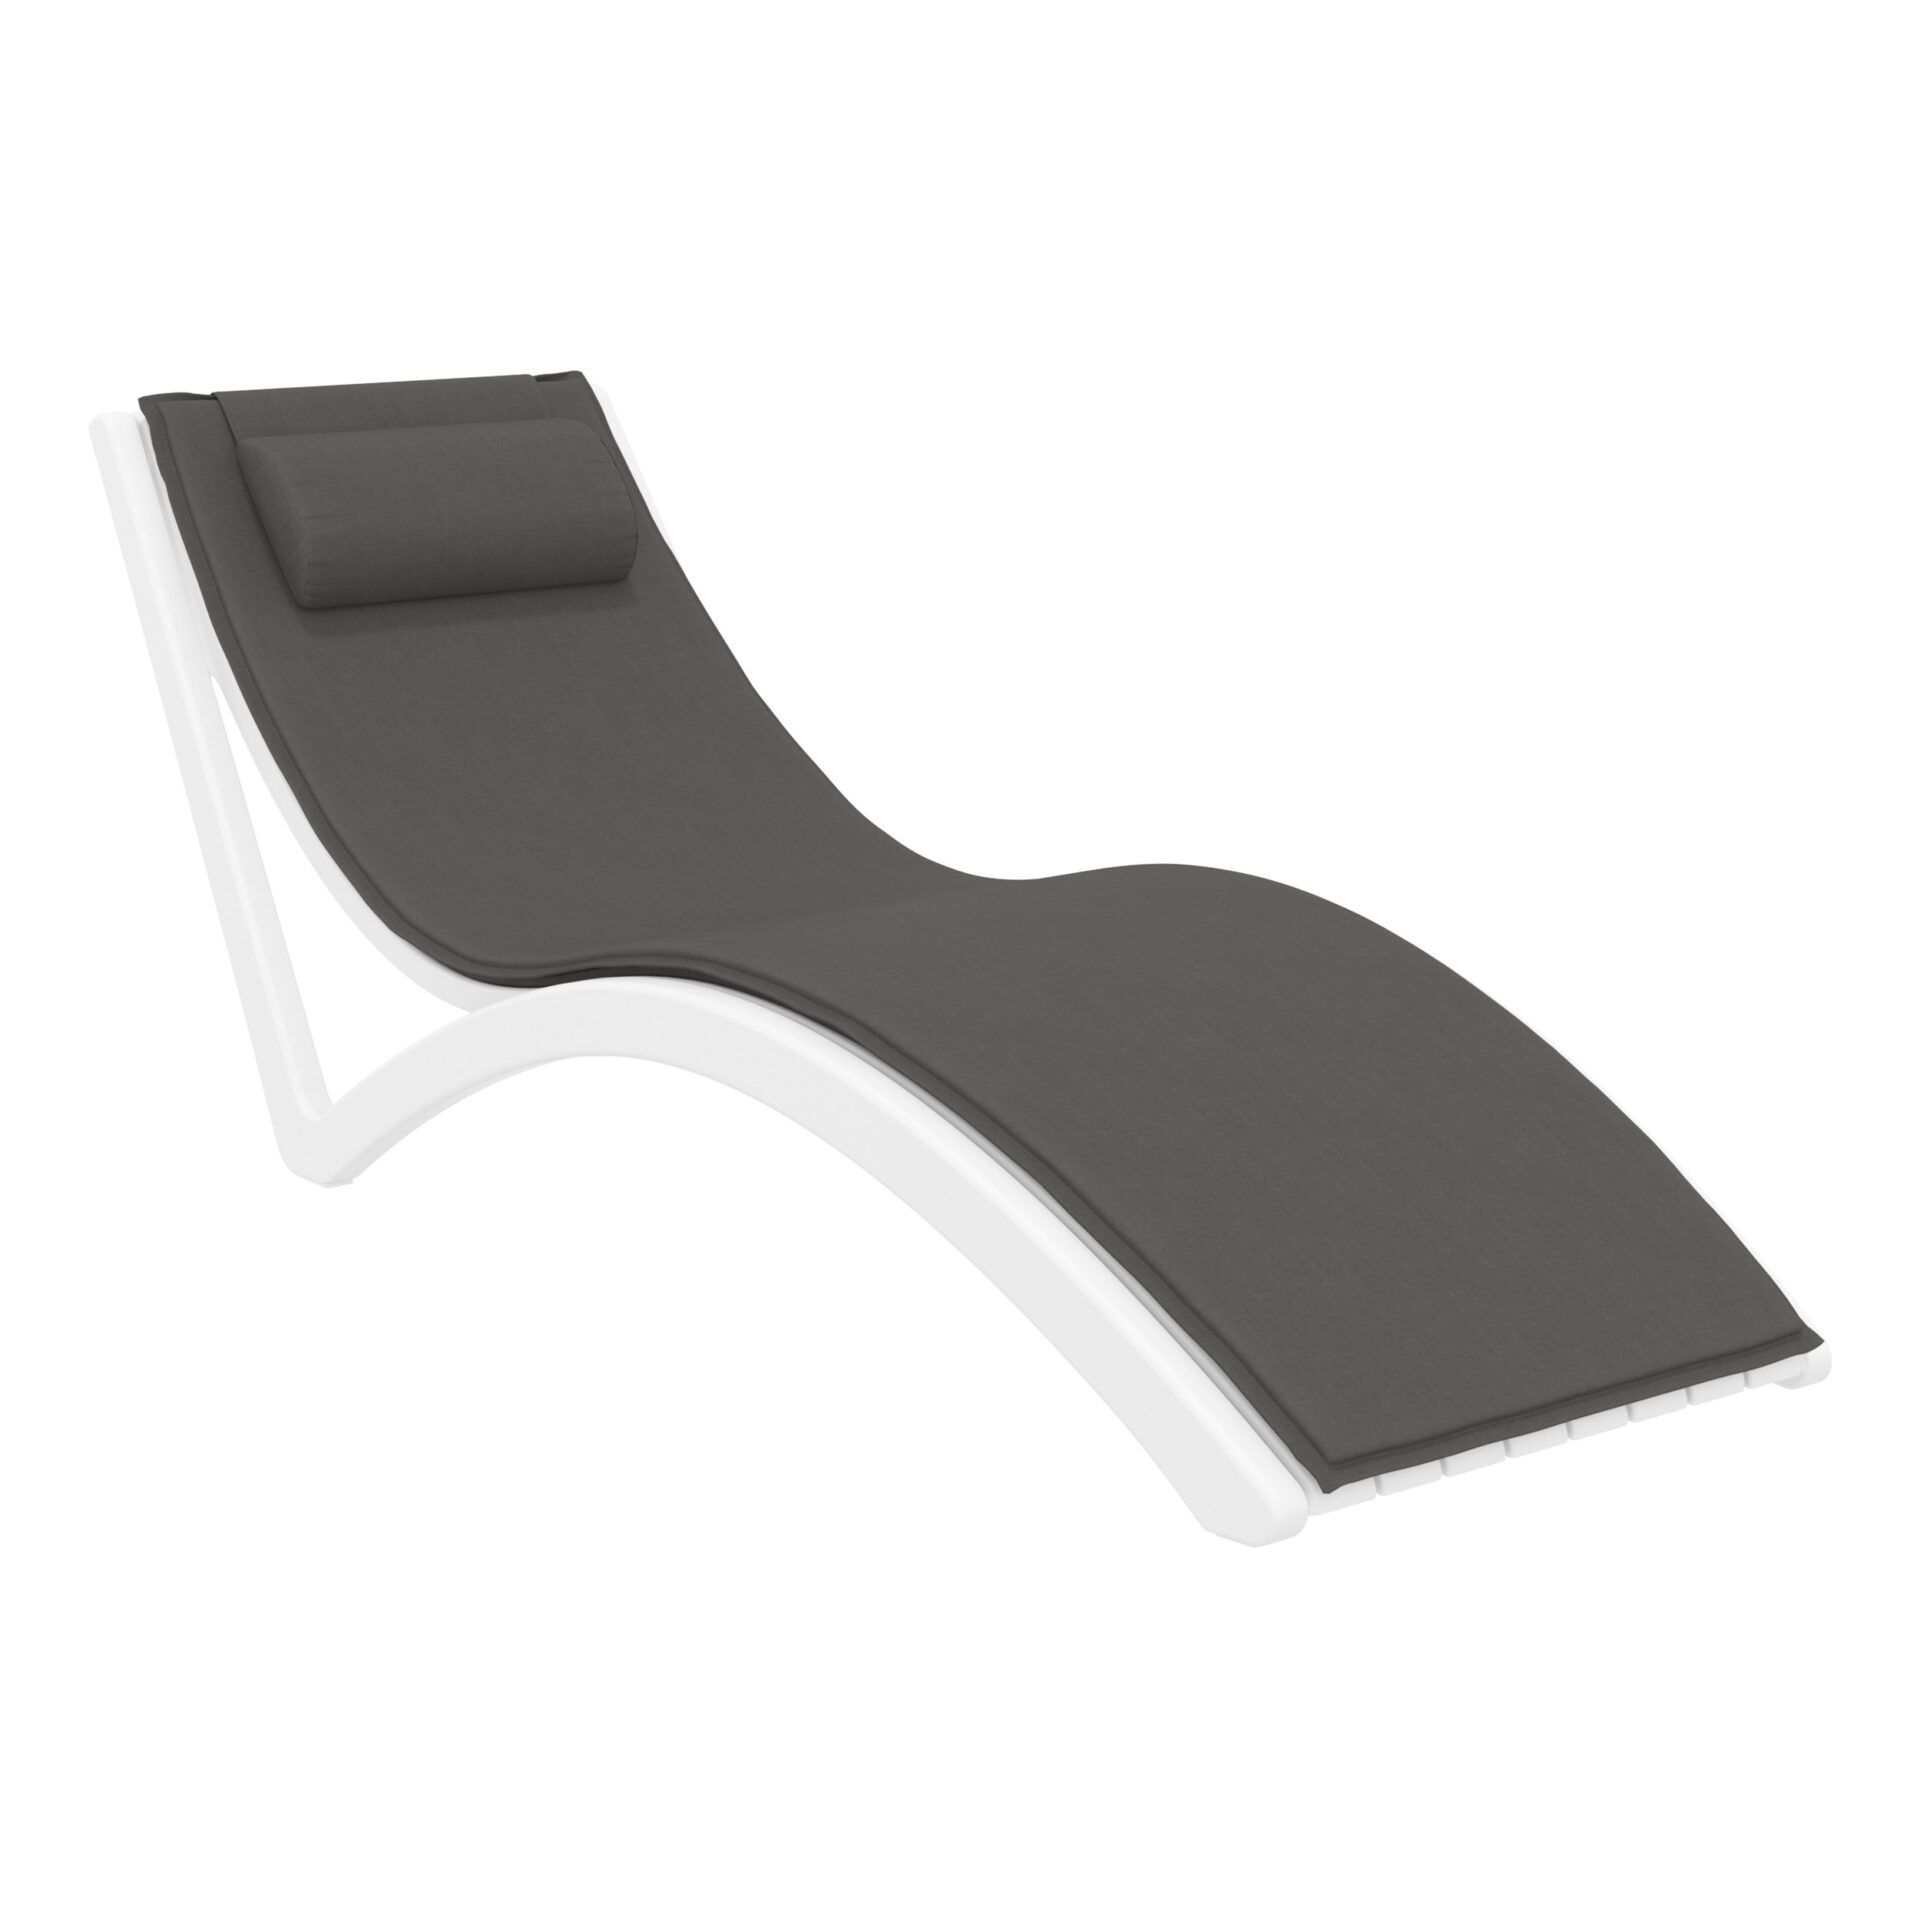 outdoor polypropylene slim sunlounger pillow cushion white darkgrey front side